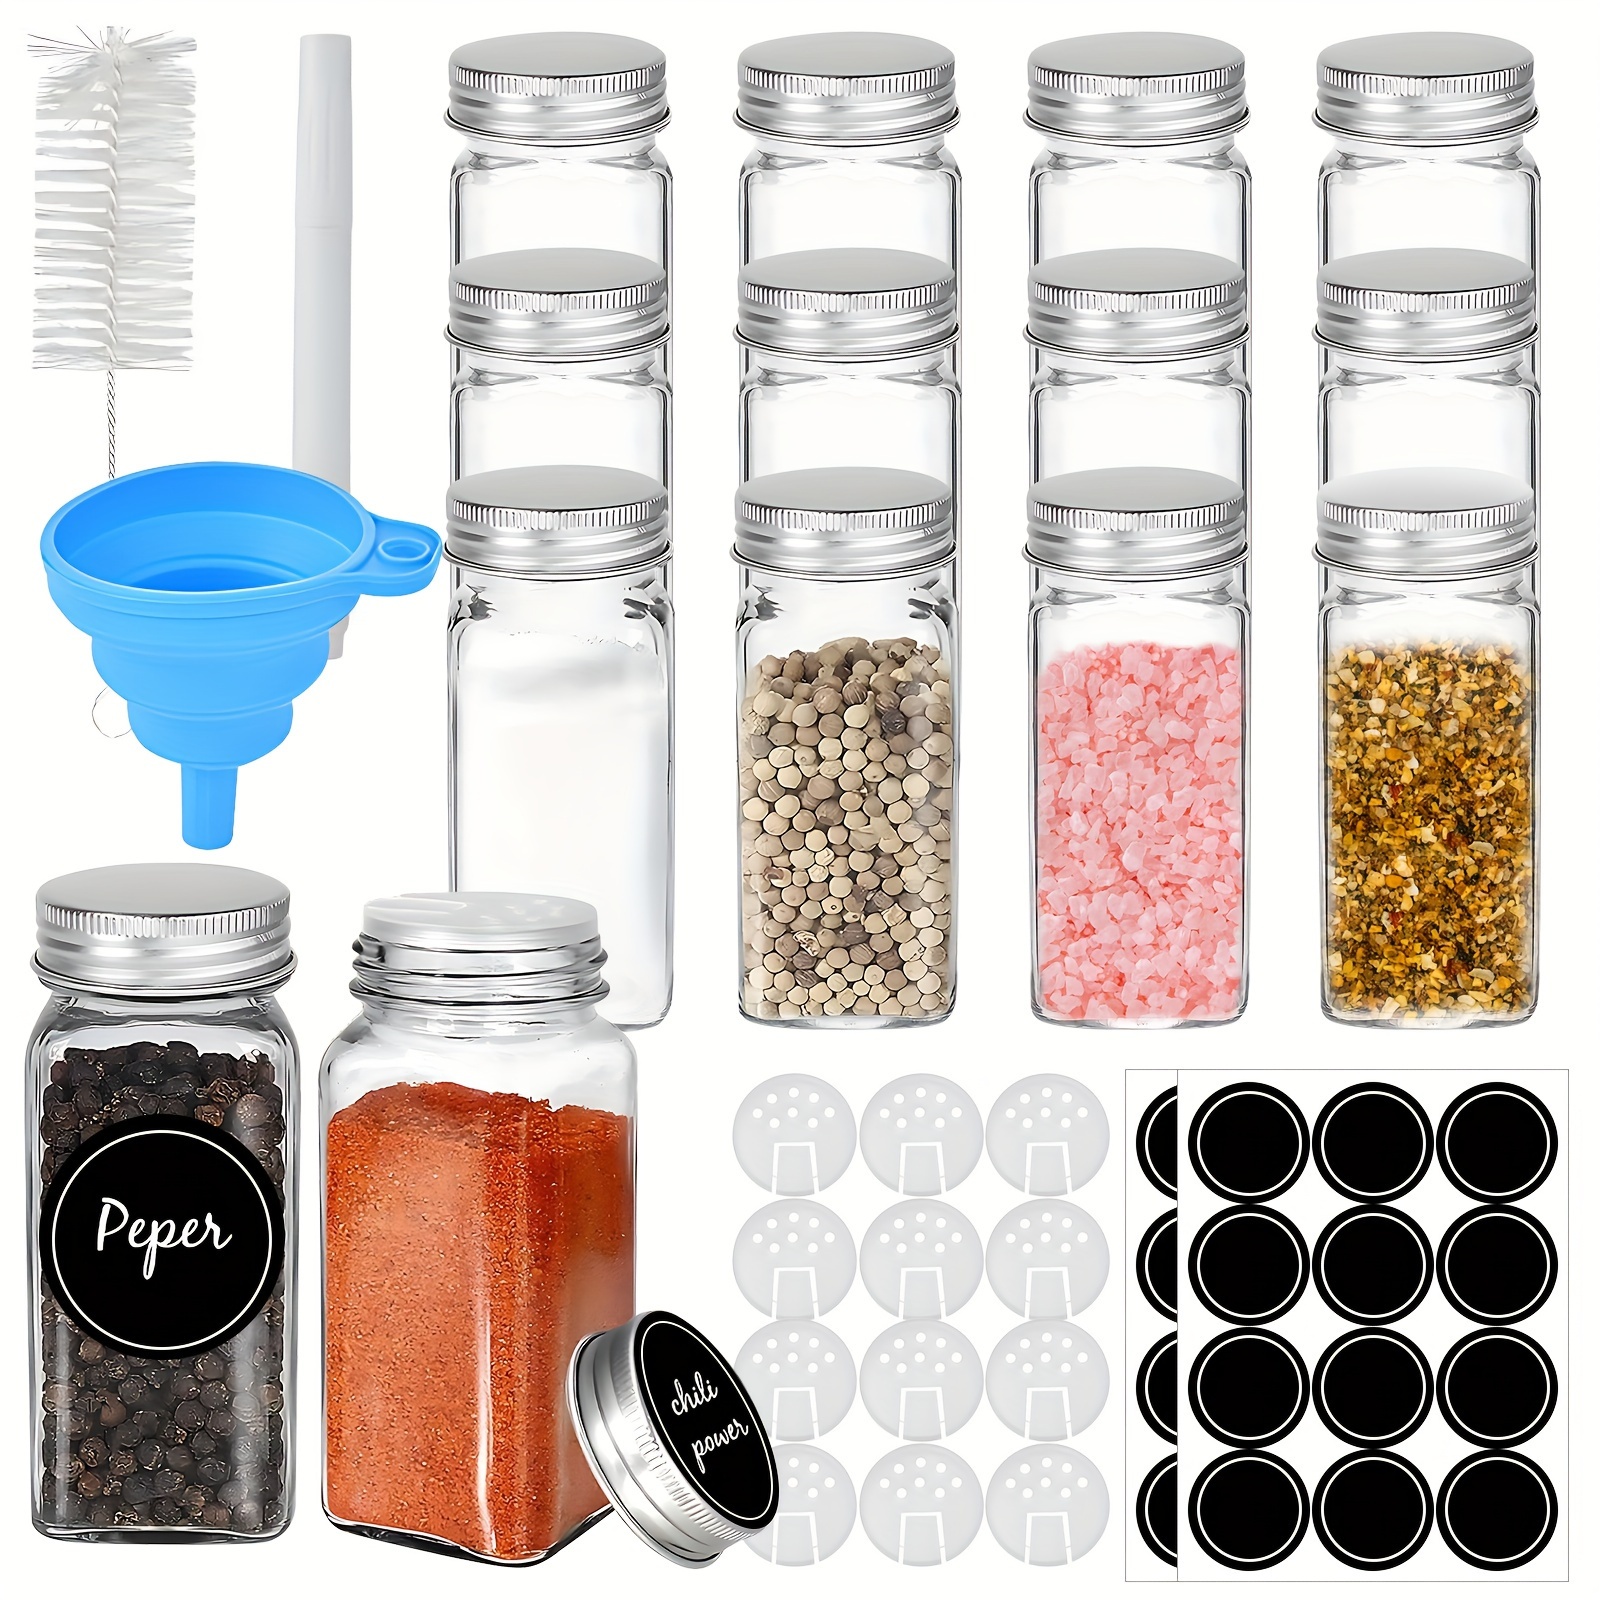  CUCUMI 12pcs 150ml Glass Spice Jars with Lids Reusable